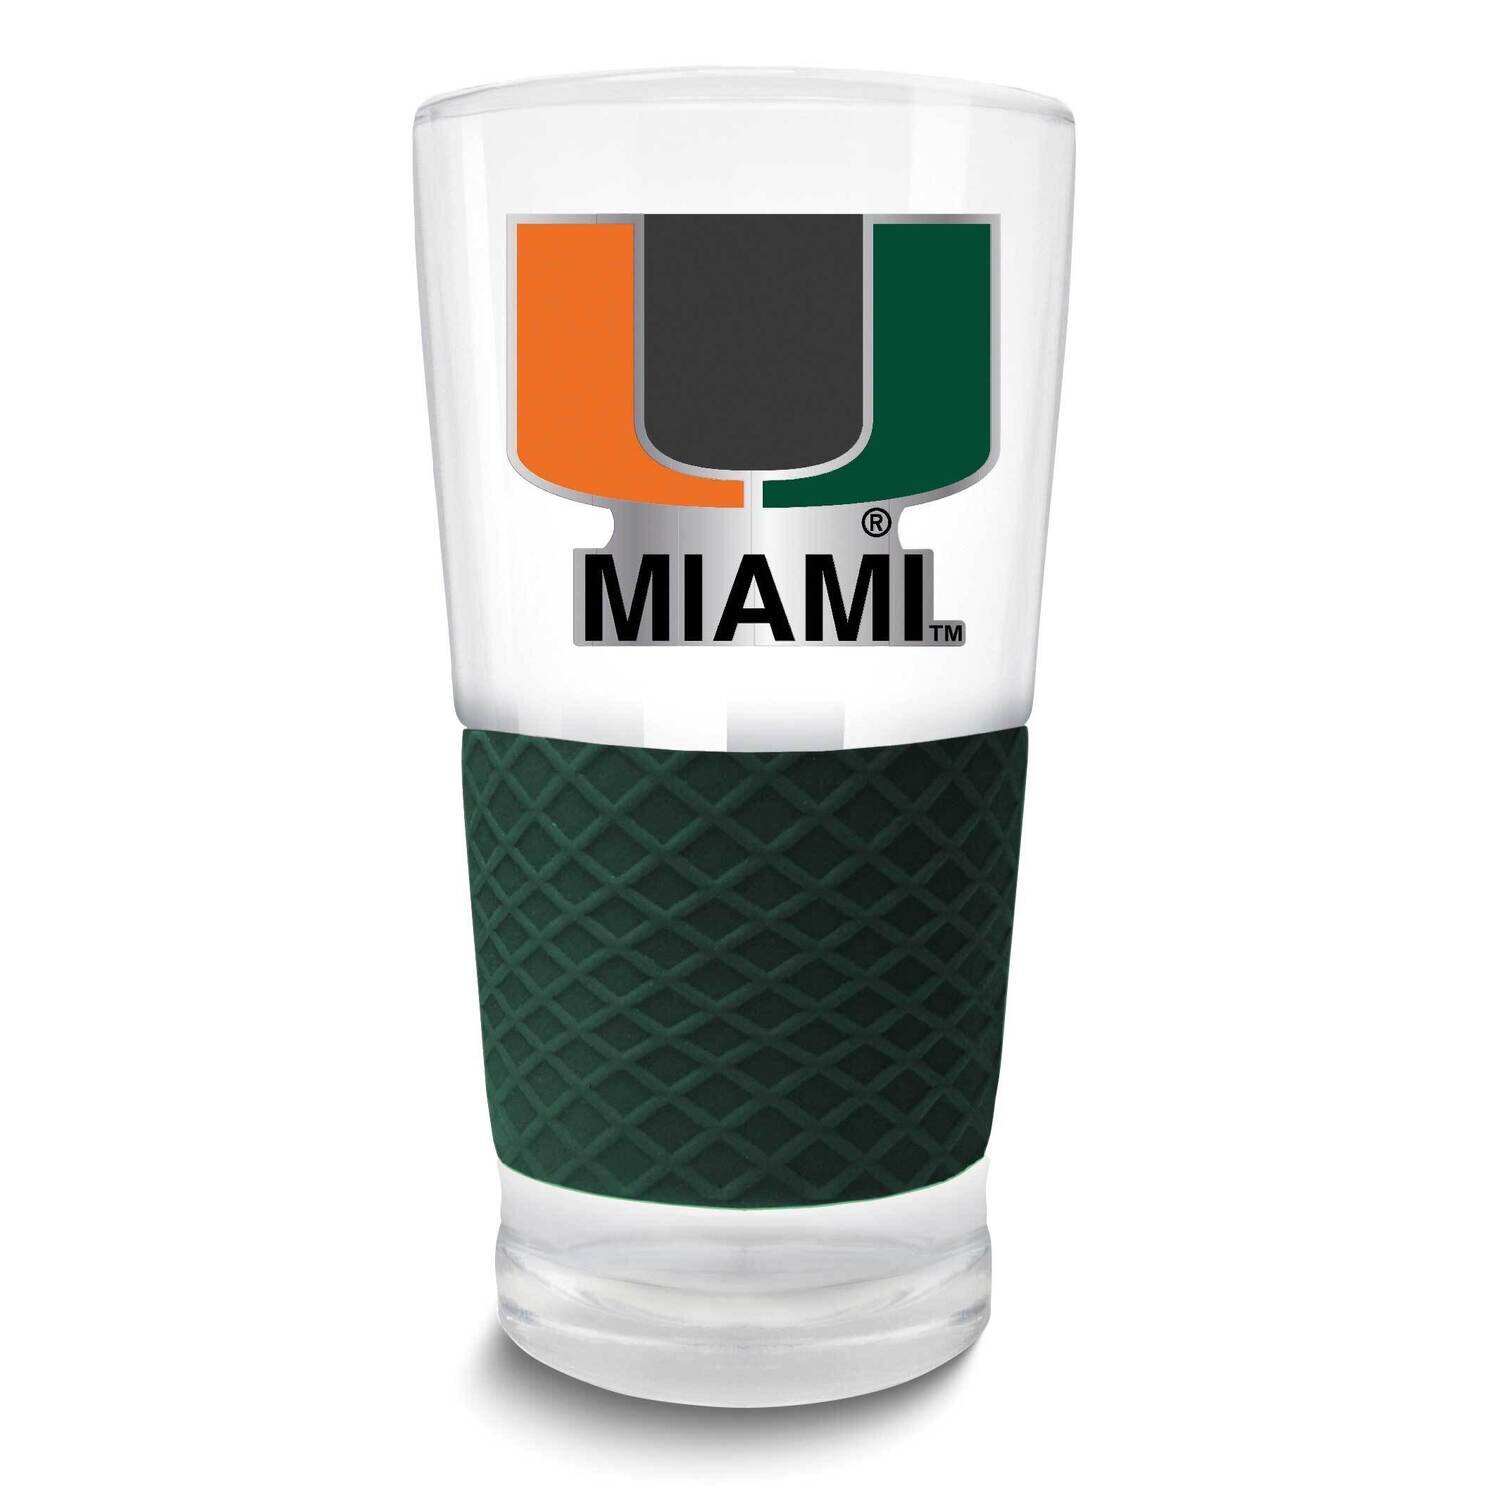 Collegiate Univeristy of Miami Score Pint Glass GM26126-UMF